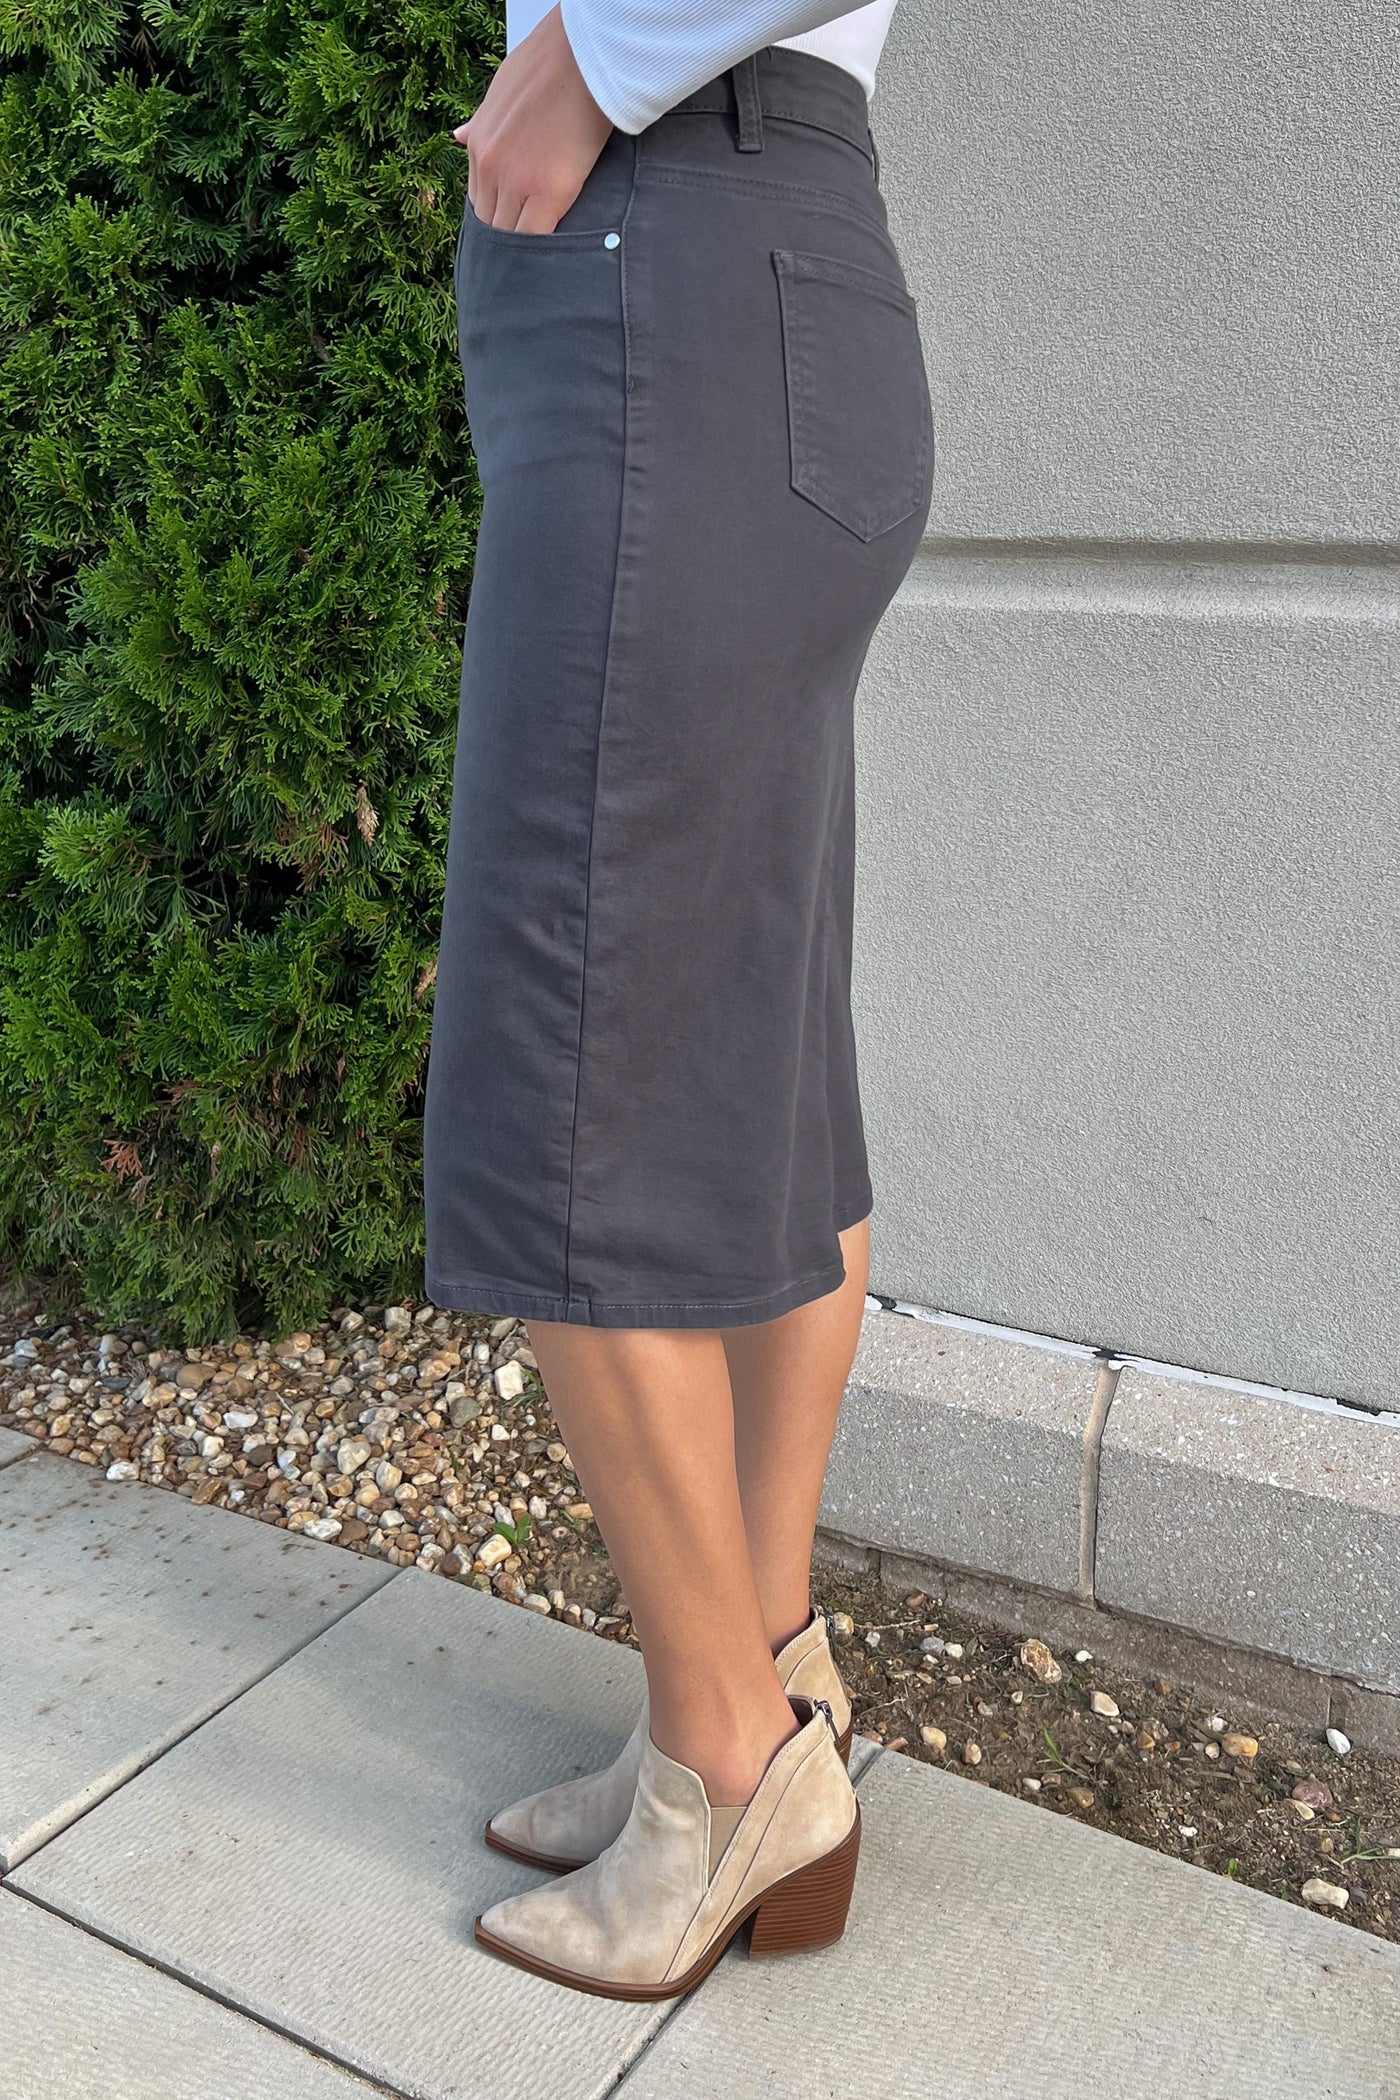 JDA Charcoal Gray Denim Skirt (FINAL SALE)